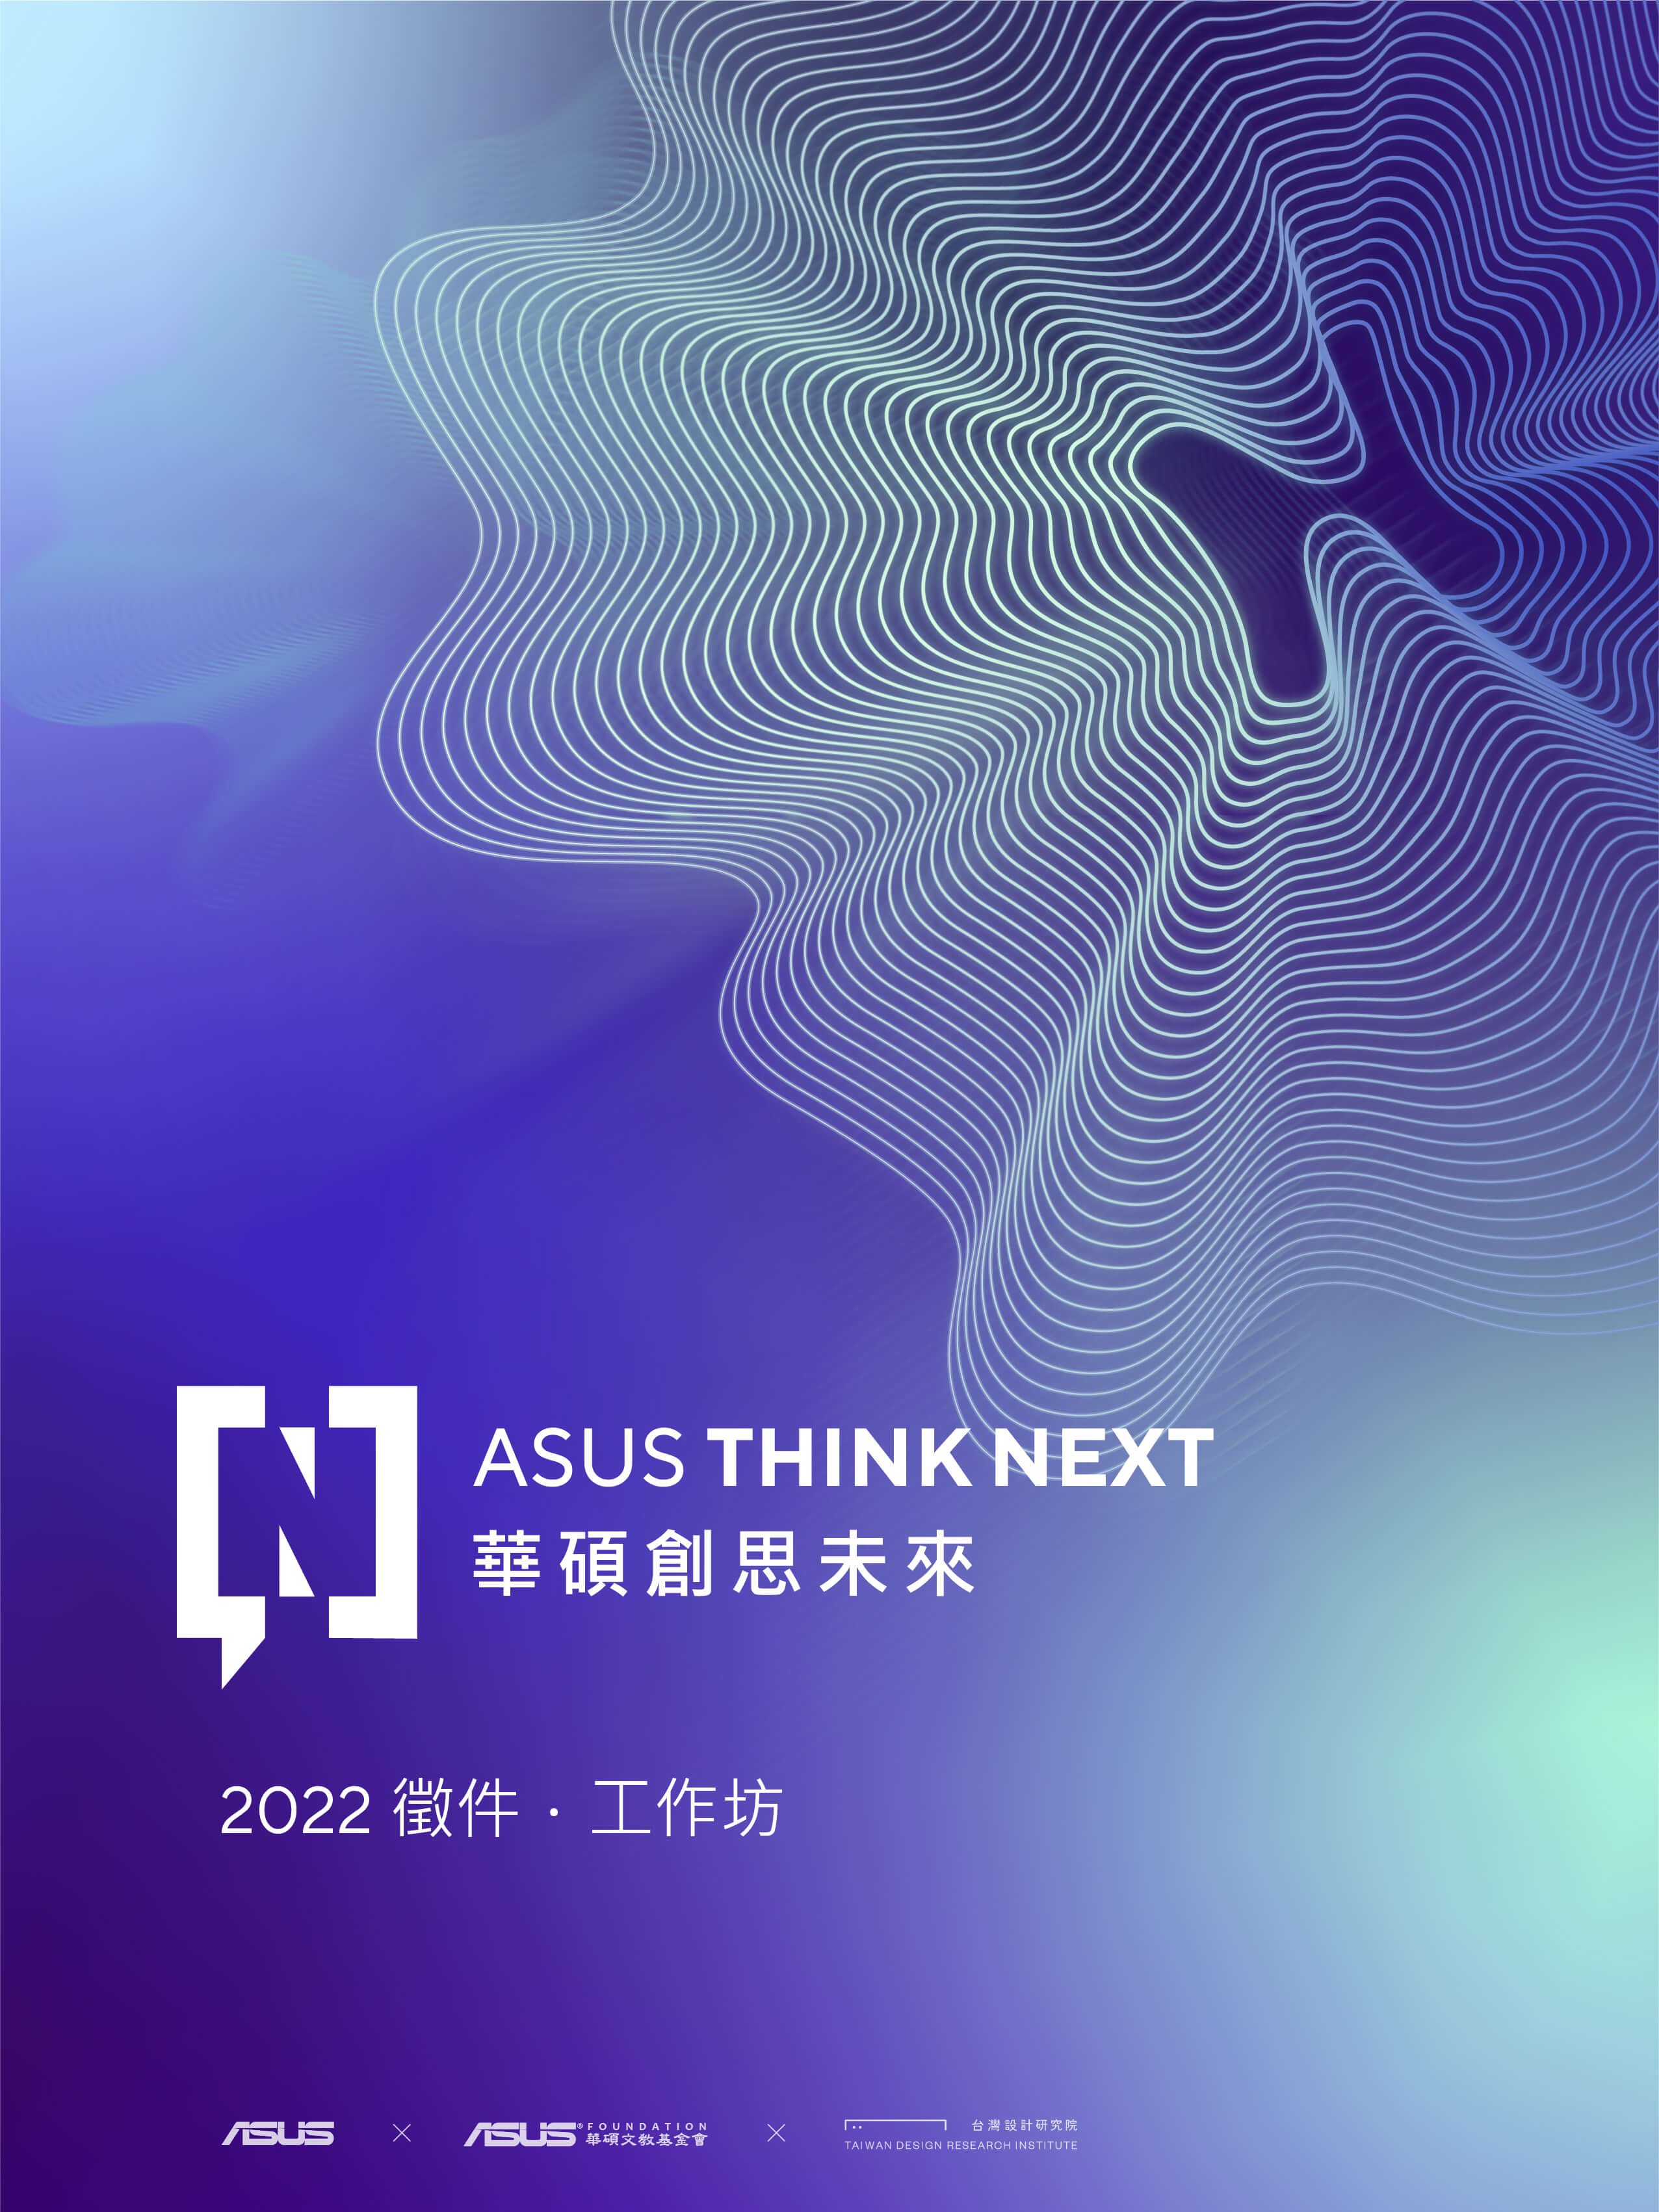 ASUS Think Next 2022